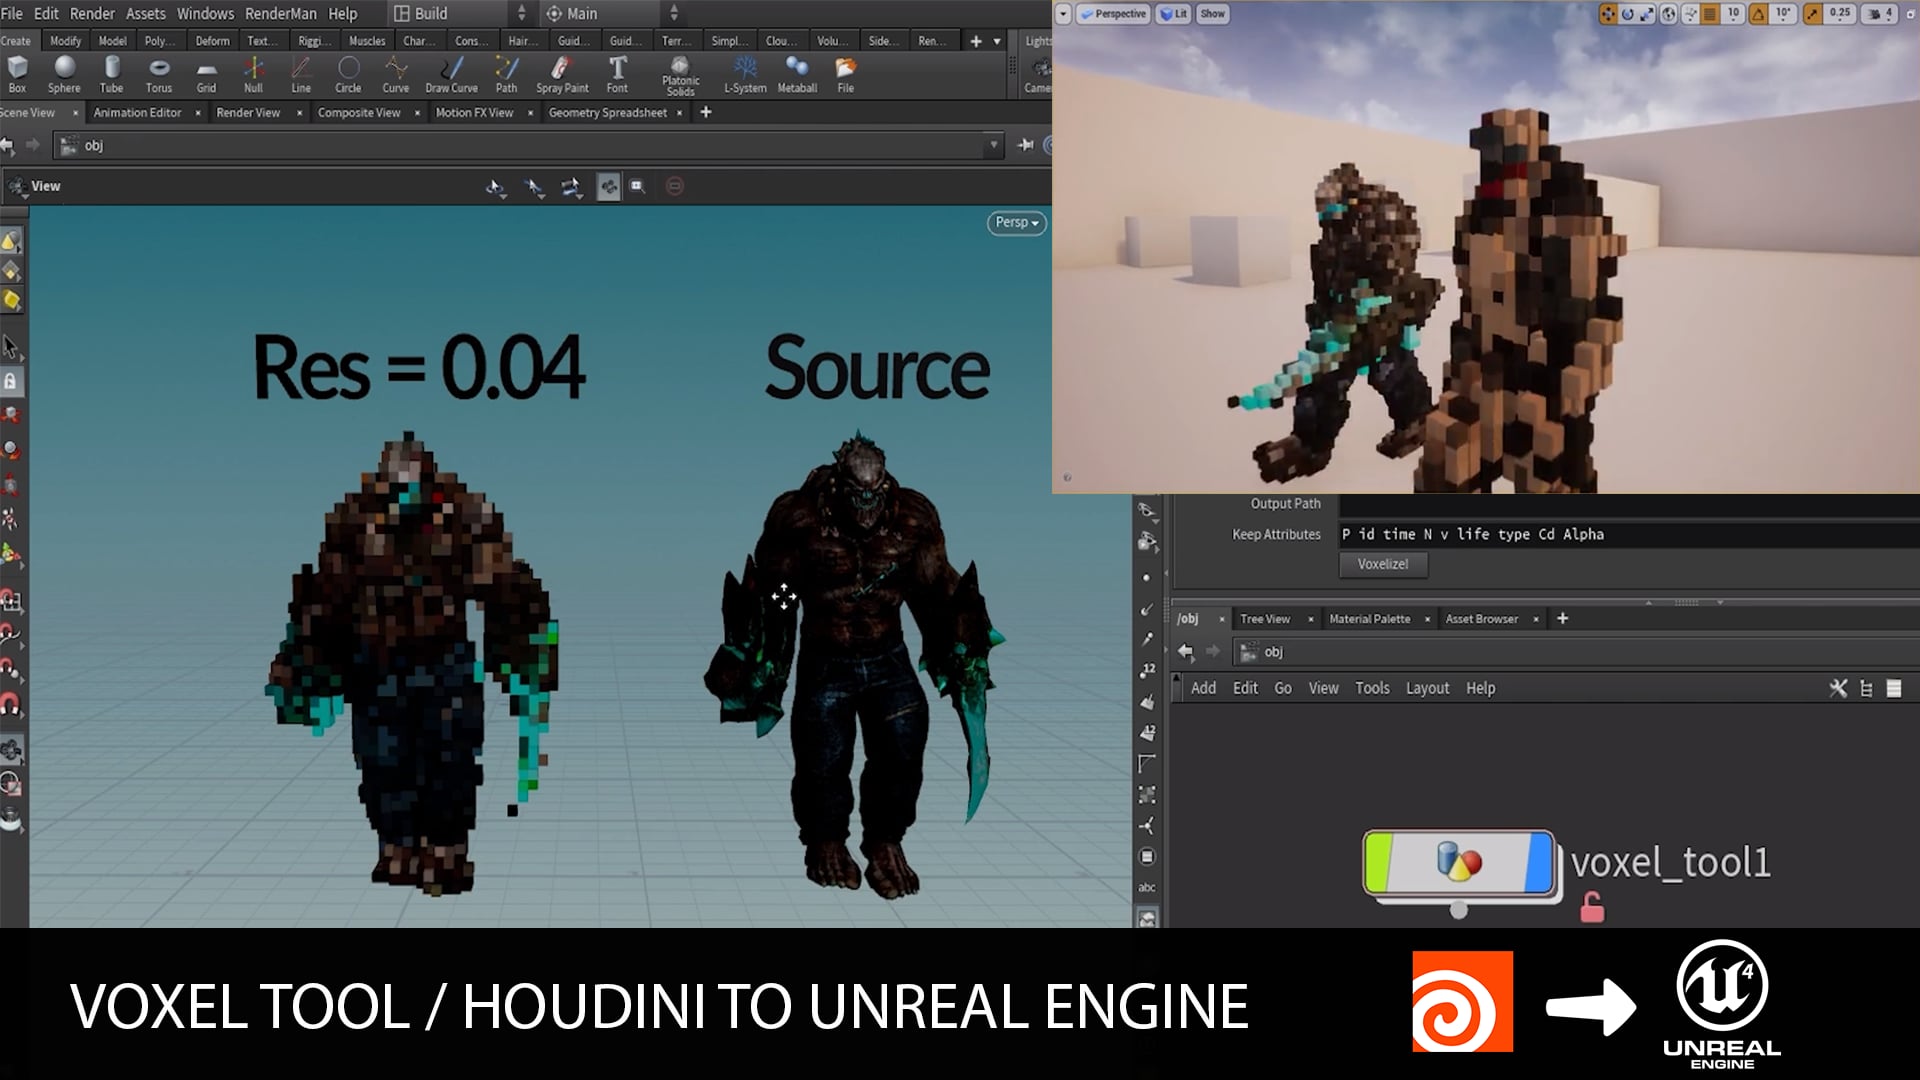 Voxel tool / Houdini to Unreal Engine (Full Niagara)